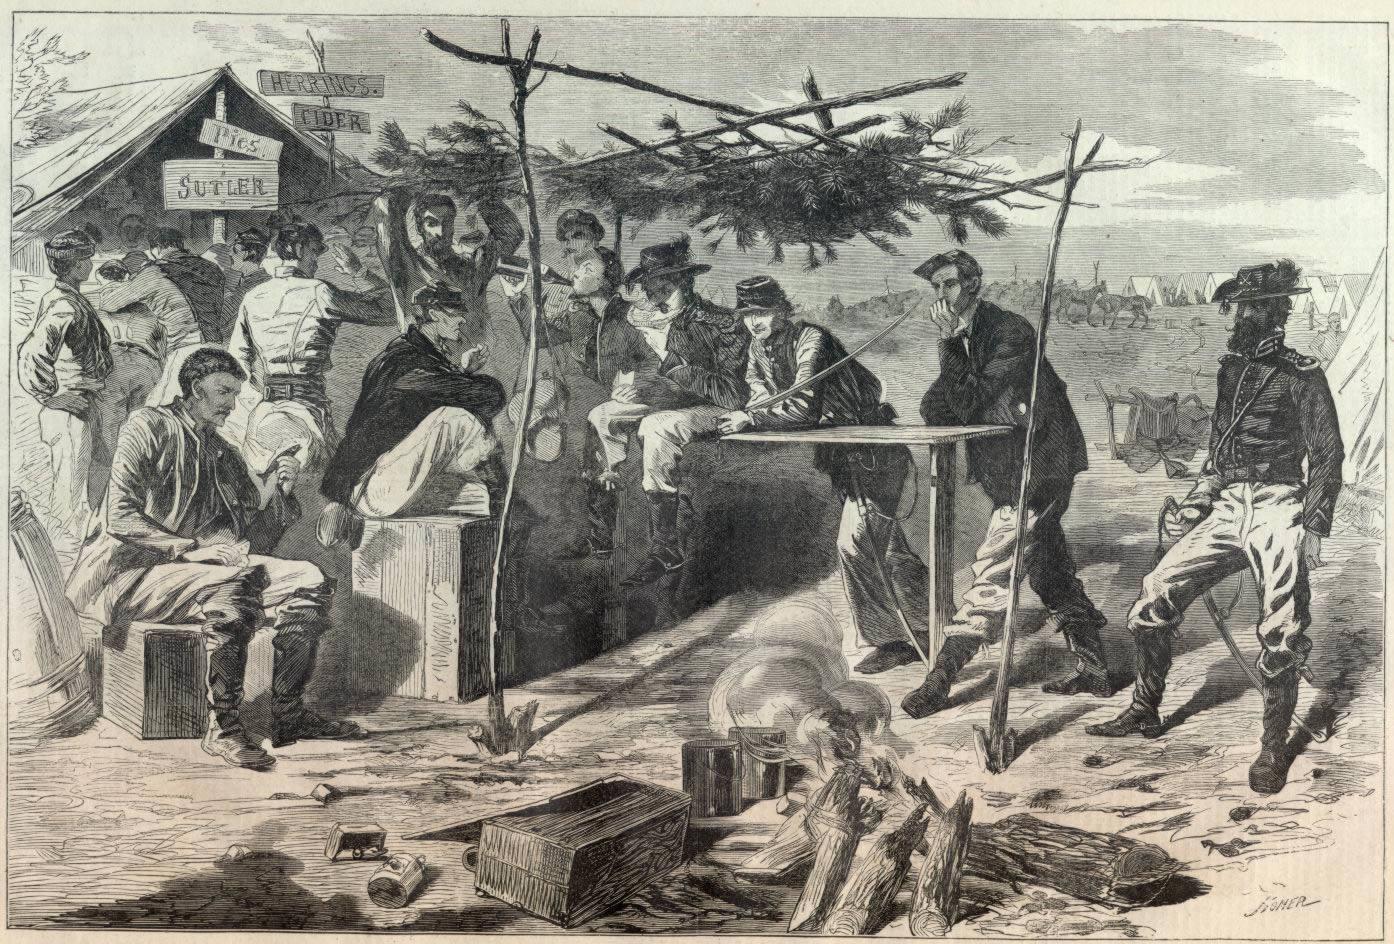 Thanksgiving Civil War Wallpaper Image featuring